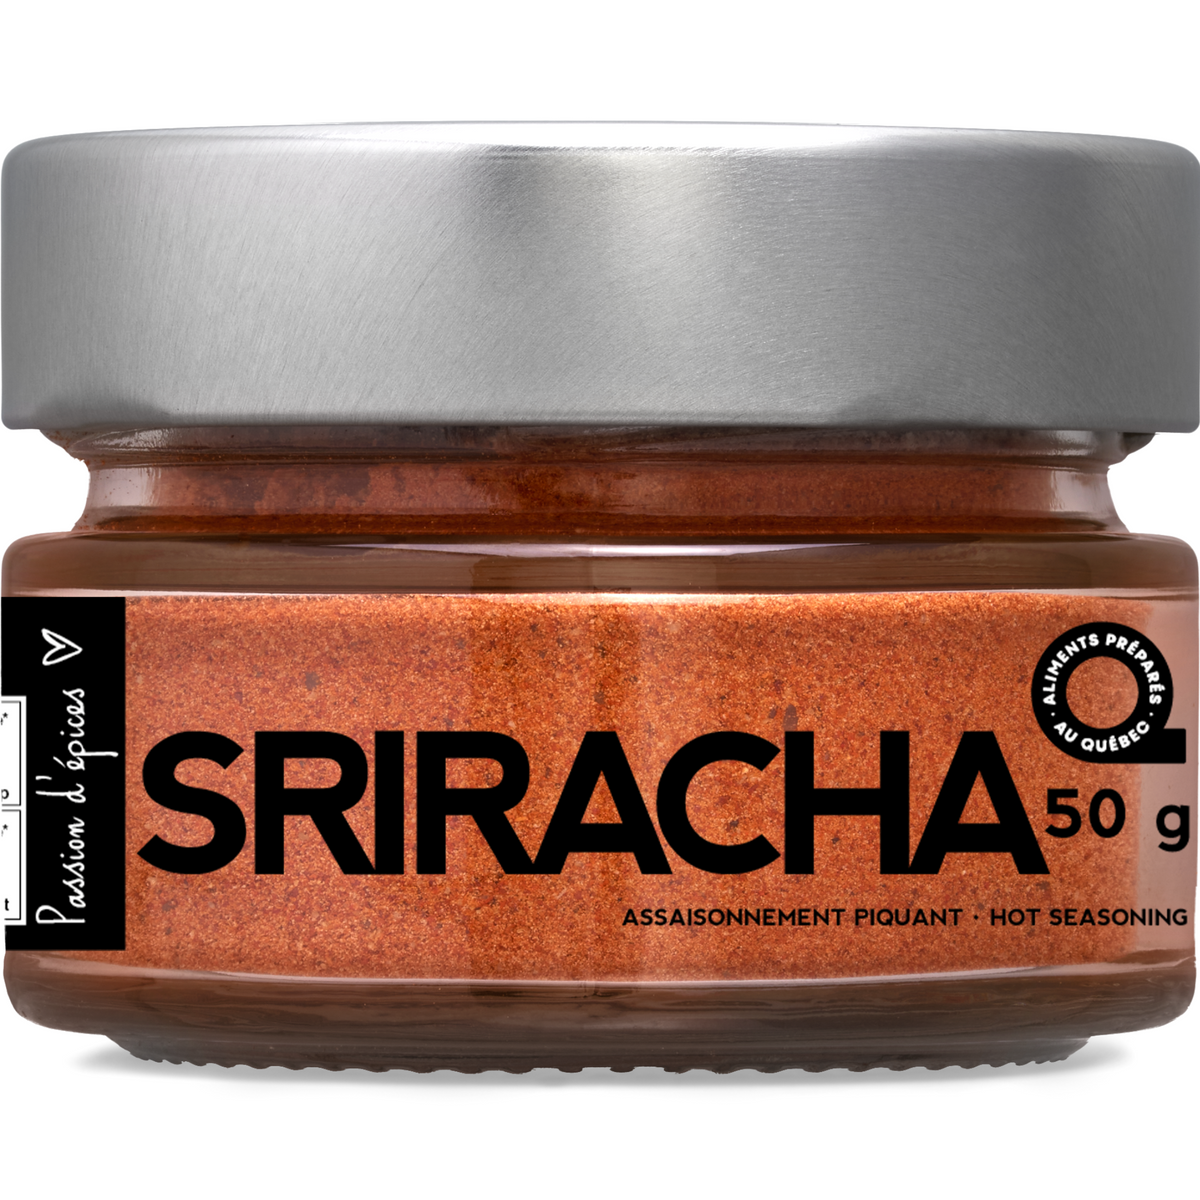 Sriracha and Harissa Flammes boxed Set - CONFITURE PARISIENNE